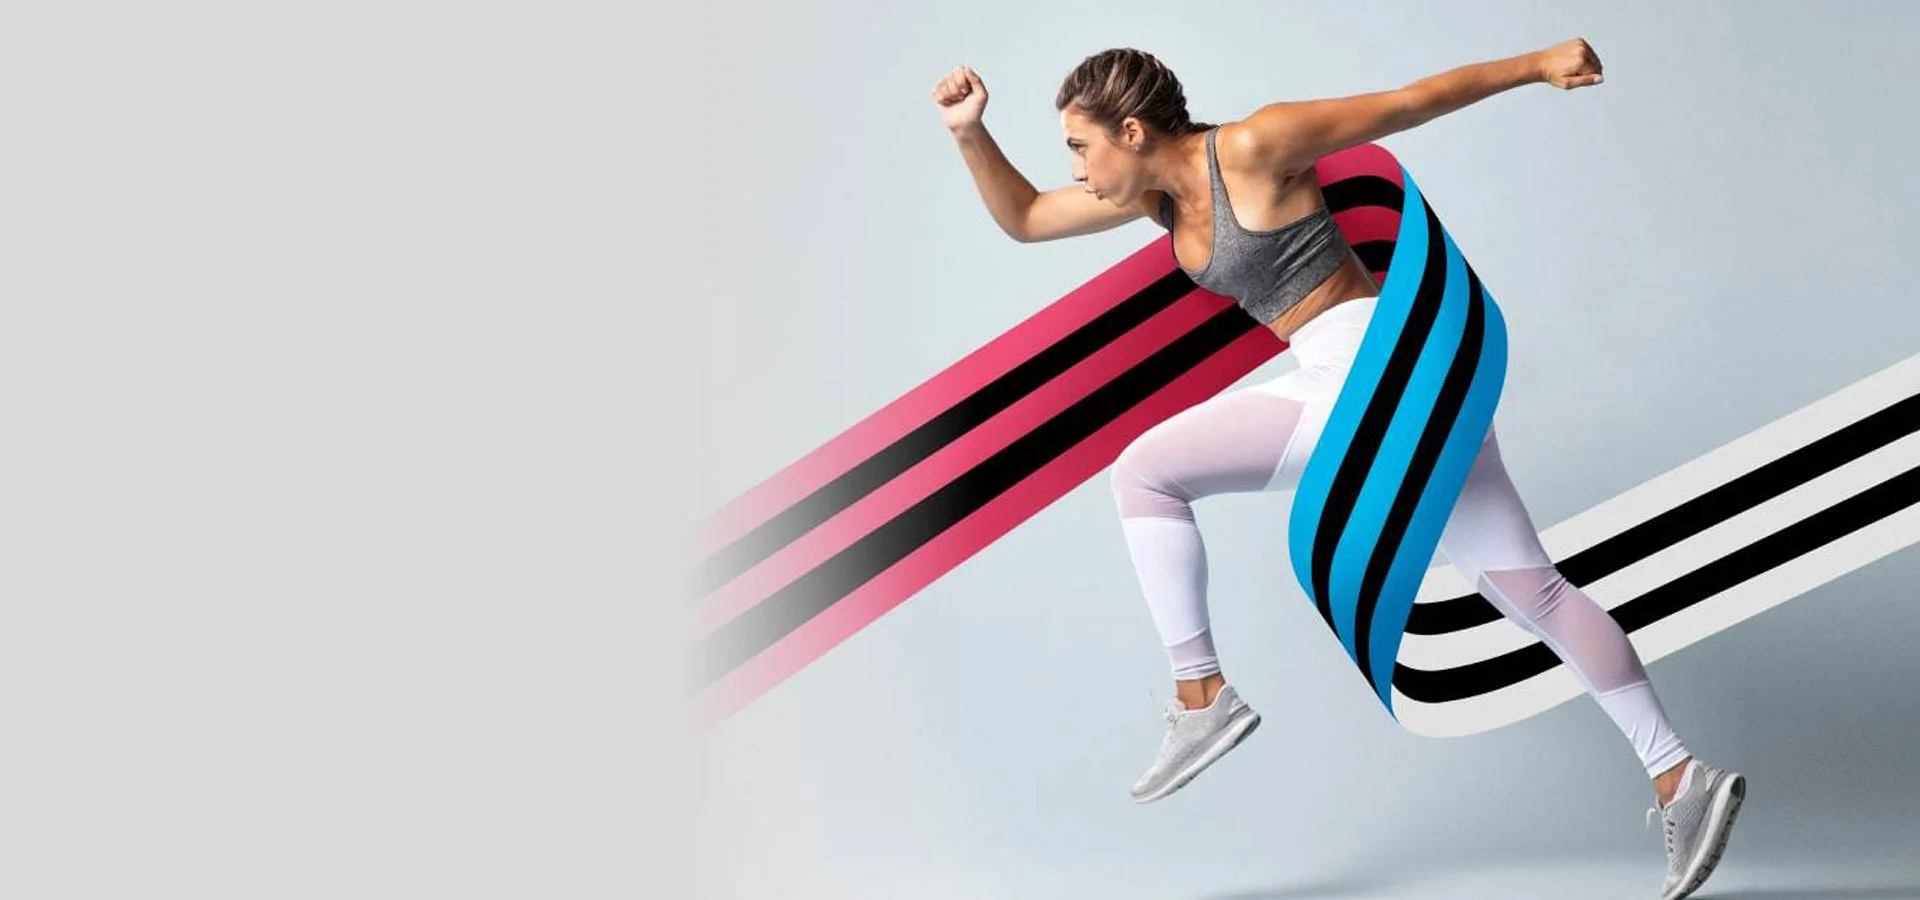 Bulk Womens Yoga Leggings and Strappy Sports Bras Manufacturer in USA,  Australia, Canada, Europe and UAE